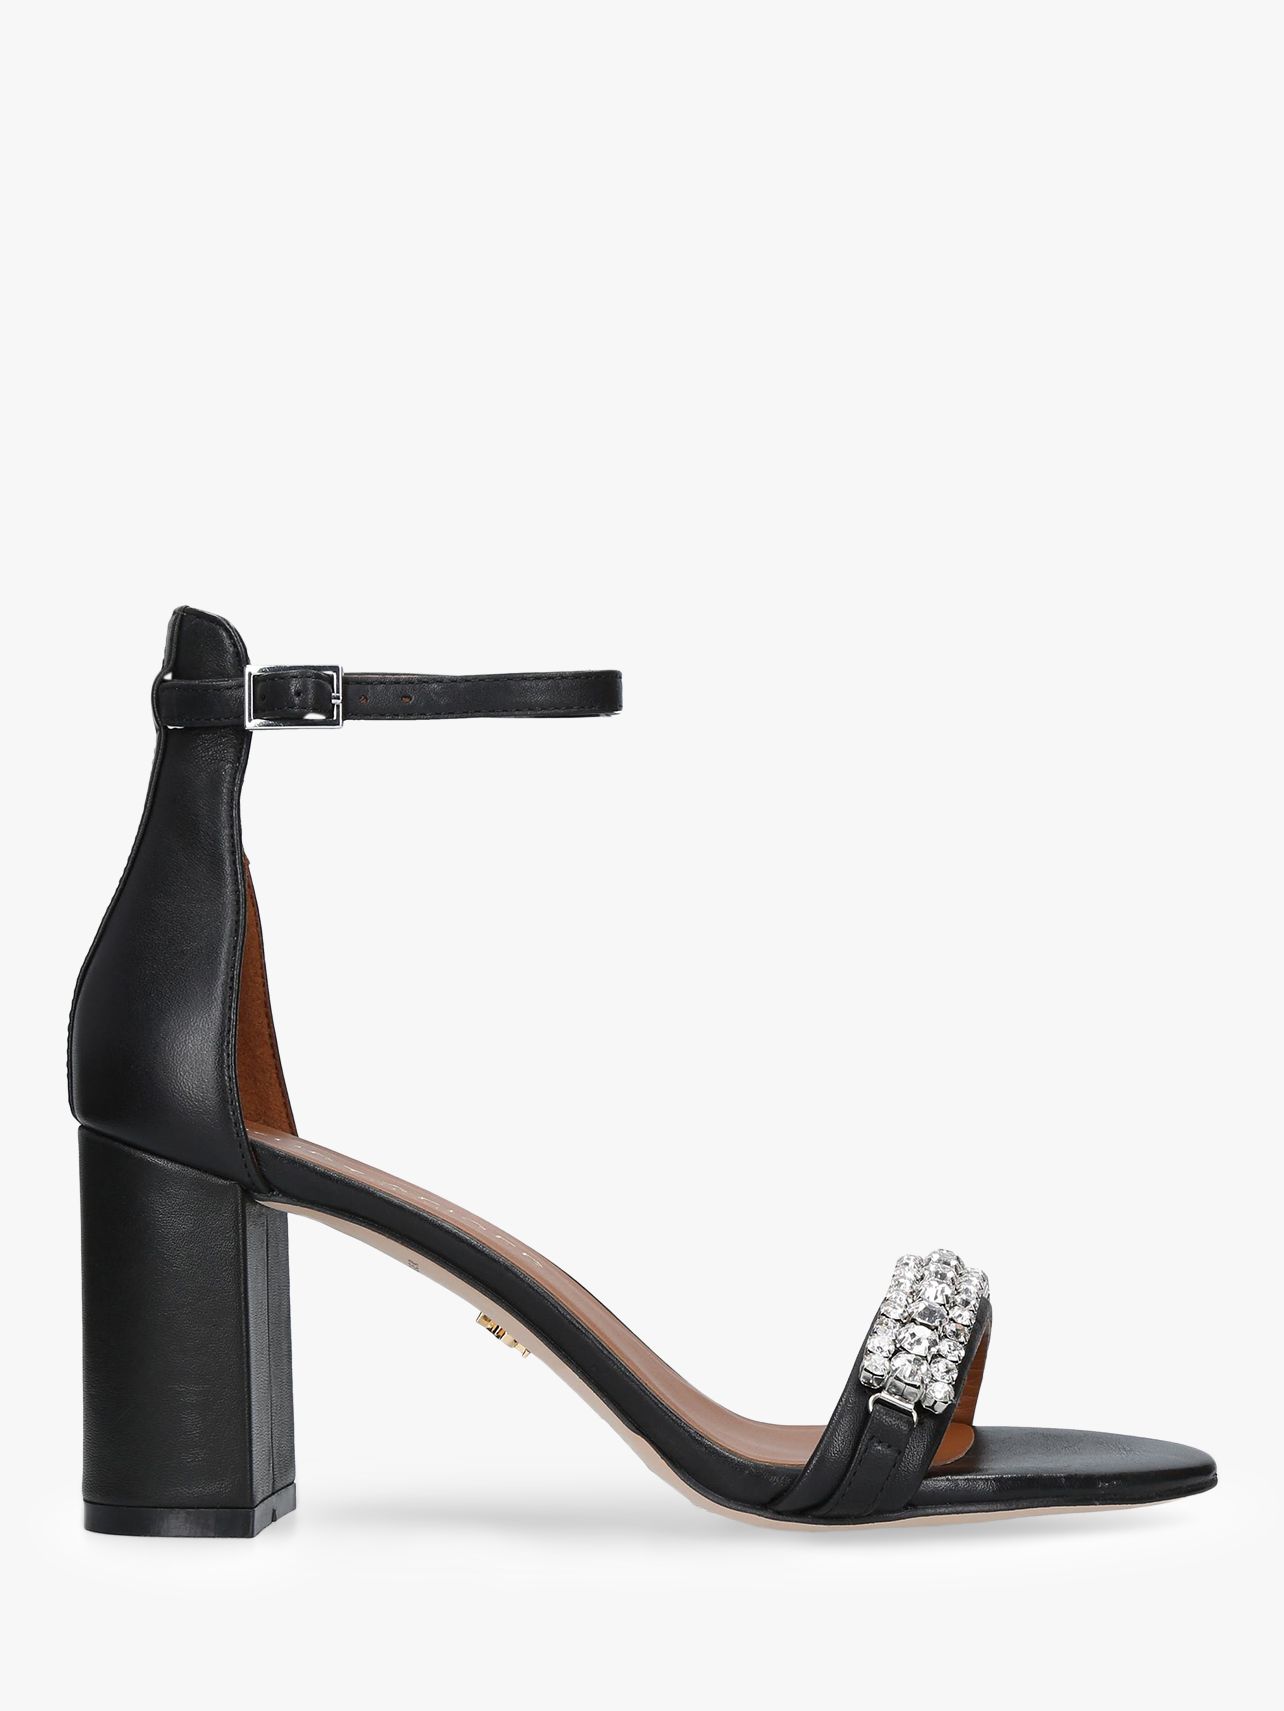 Kurt Geiger London Queenie Jewelled Block Heel Sandals, Black Leather